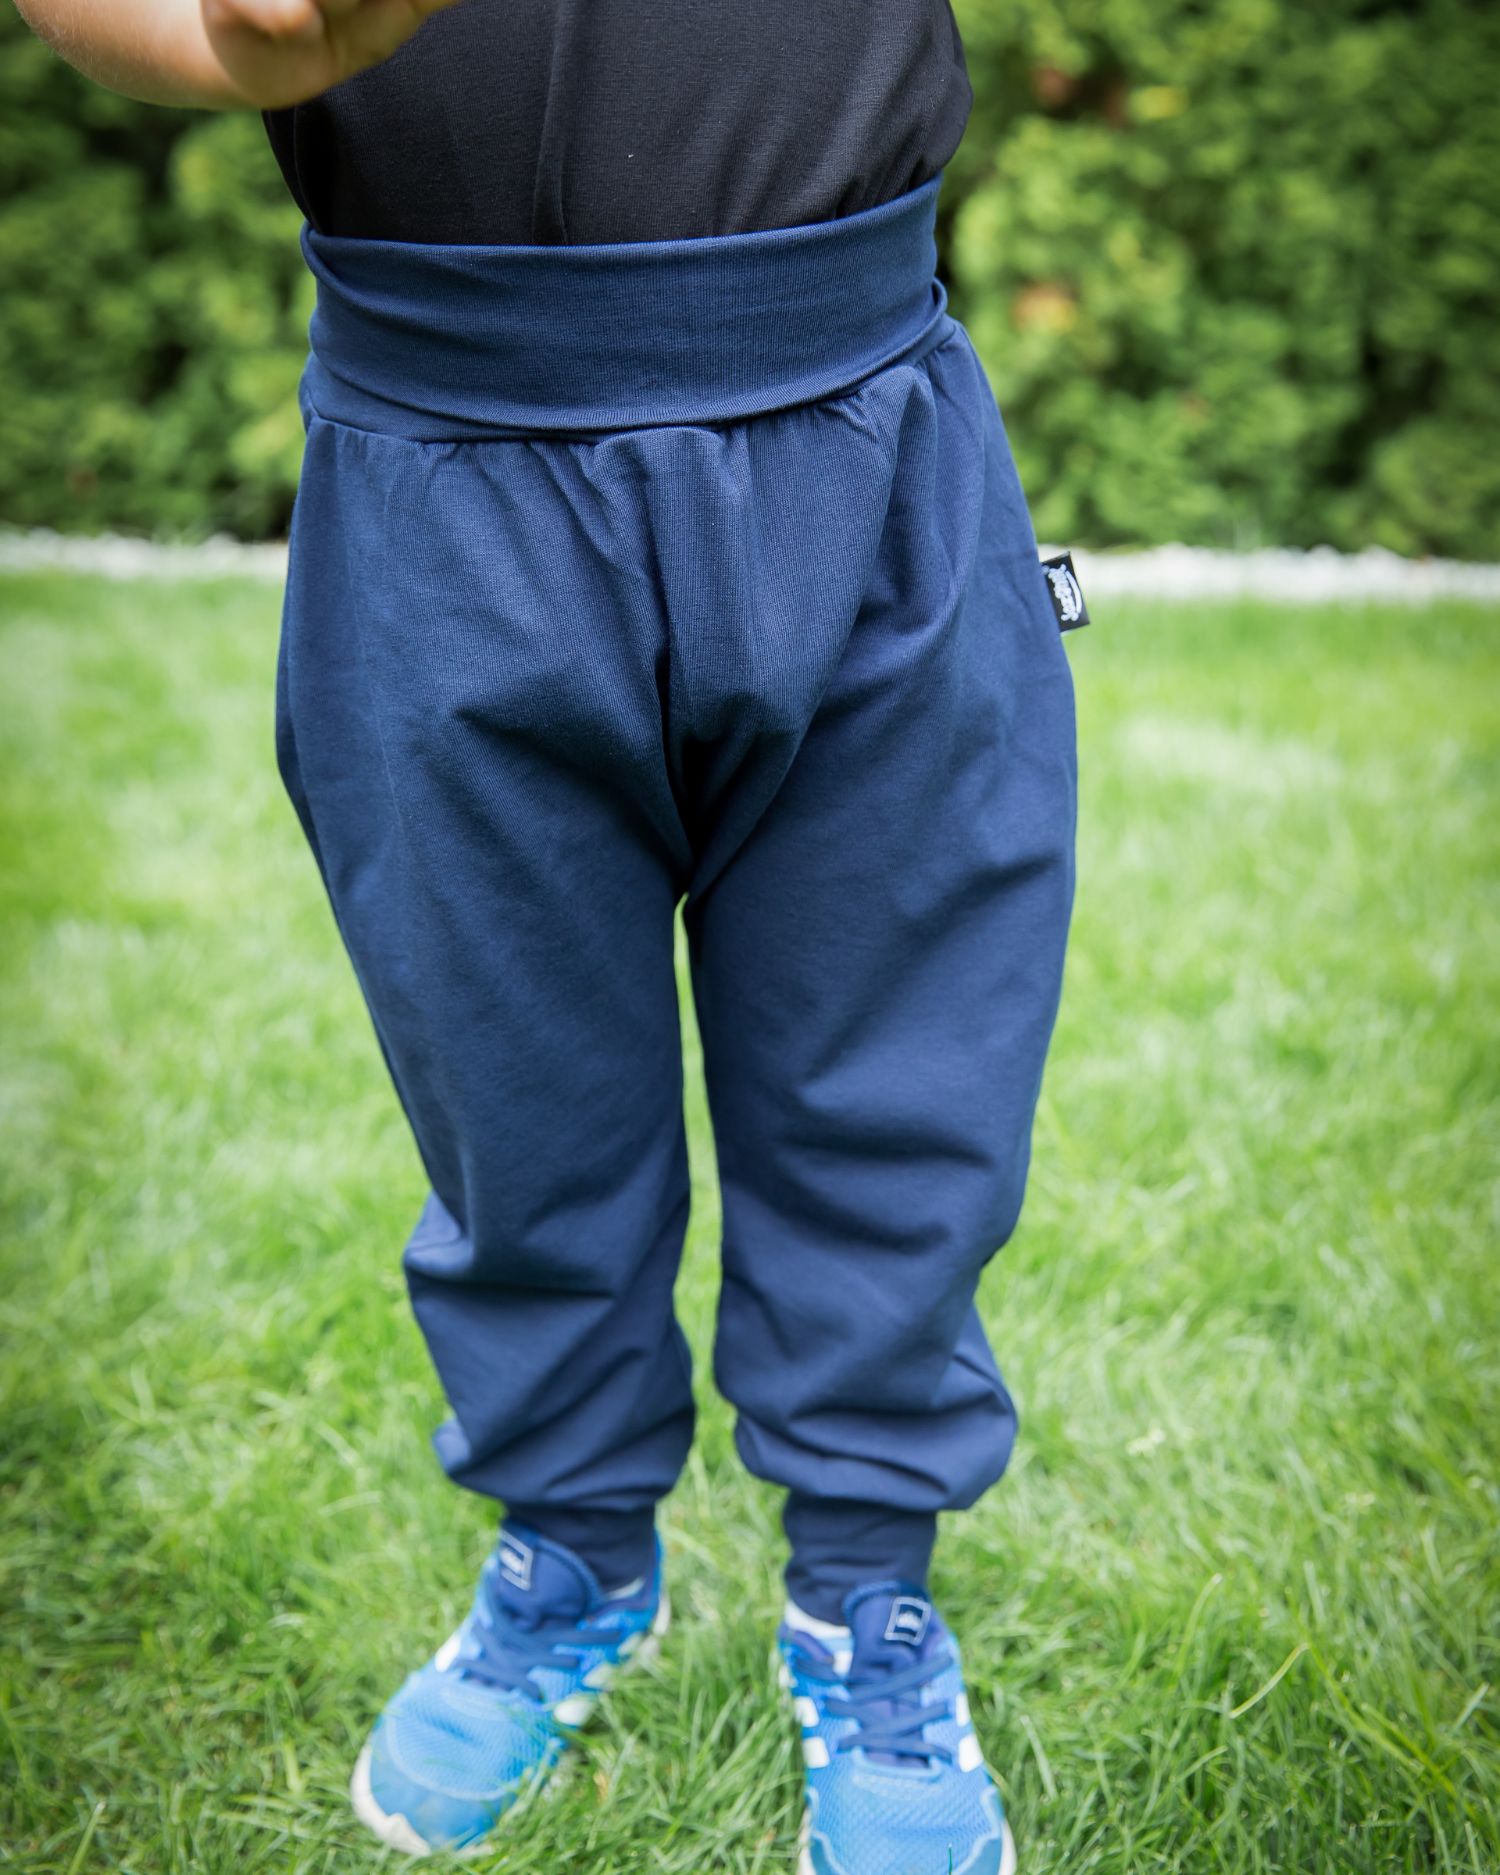 Baggy pants for kids, dark blue